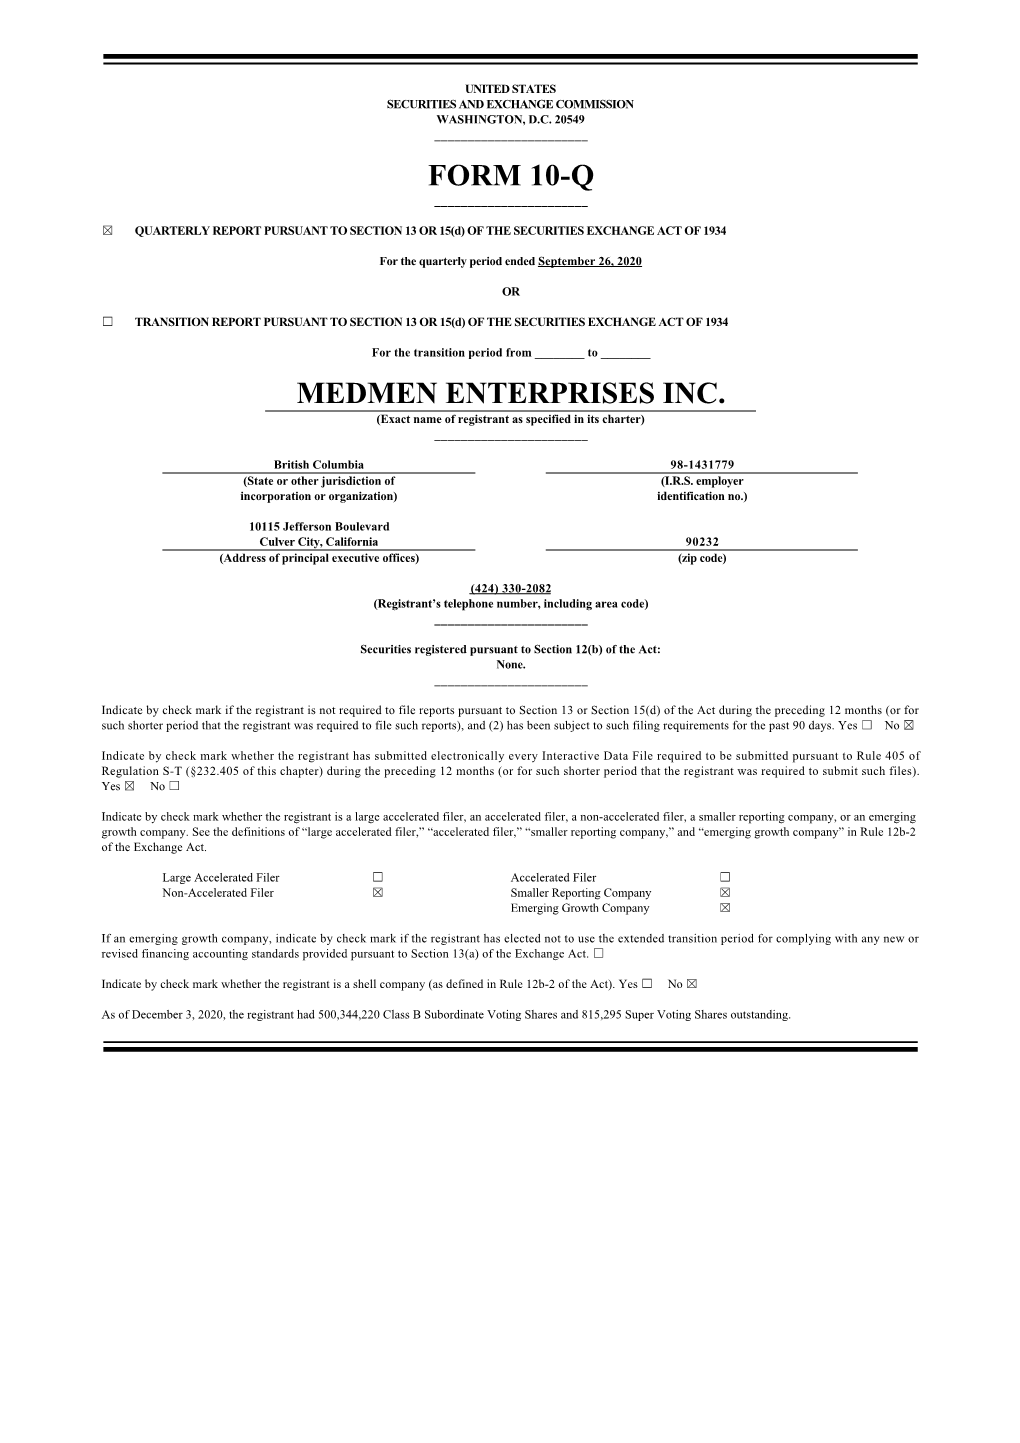 Medmen Enterprises, Inc. Quarterly Report on Form 10­Q for the Quarterly Period Ended September 26, 2020